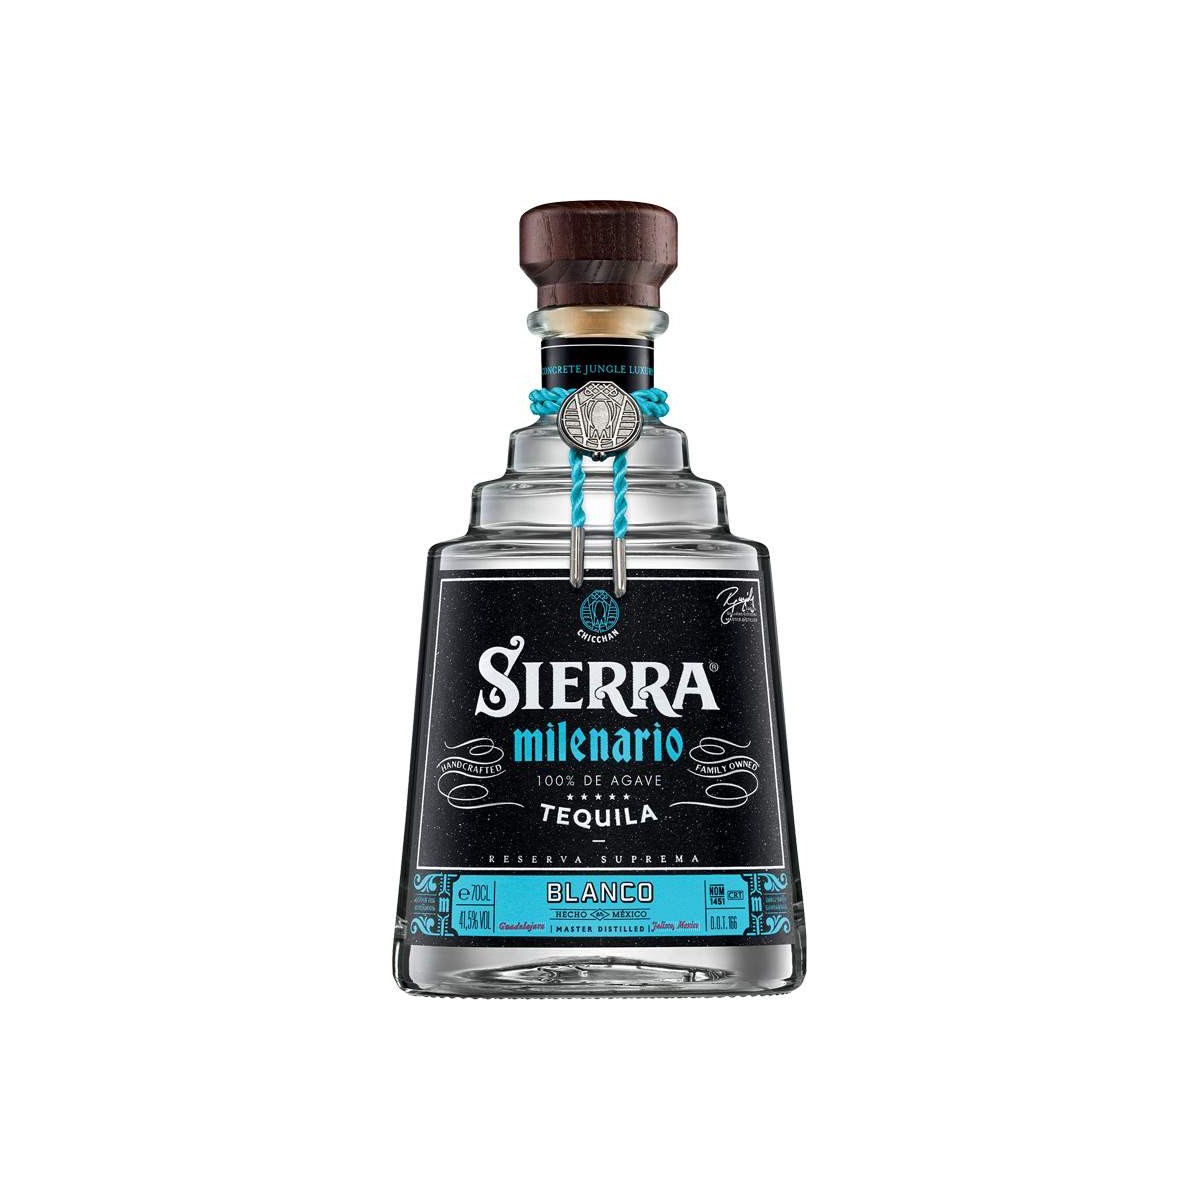 Sierra Tequila Milenario Blanco 0,7l